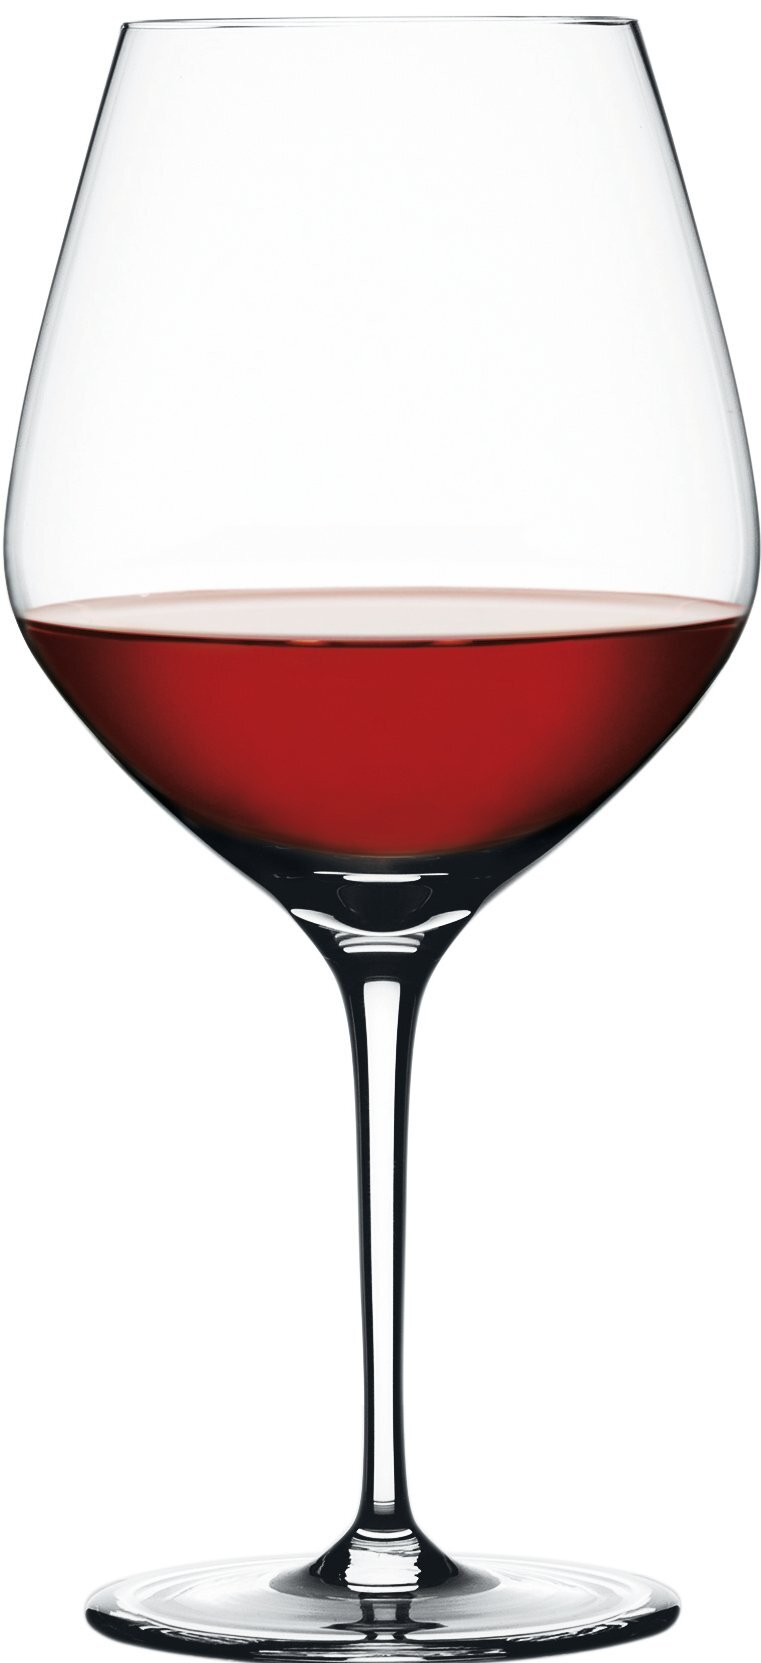 Spiegelau Authentis bourgogne wijnglas - set van 4